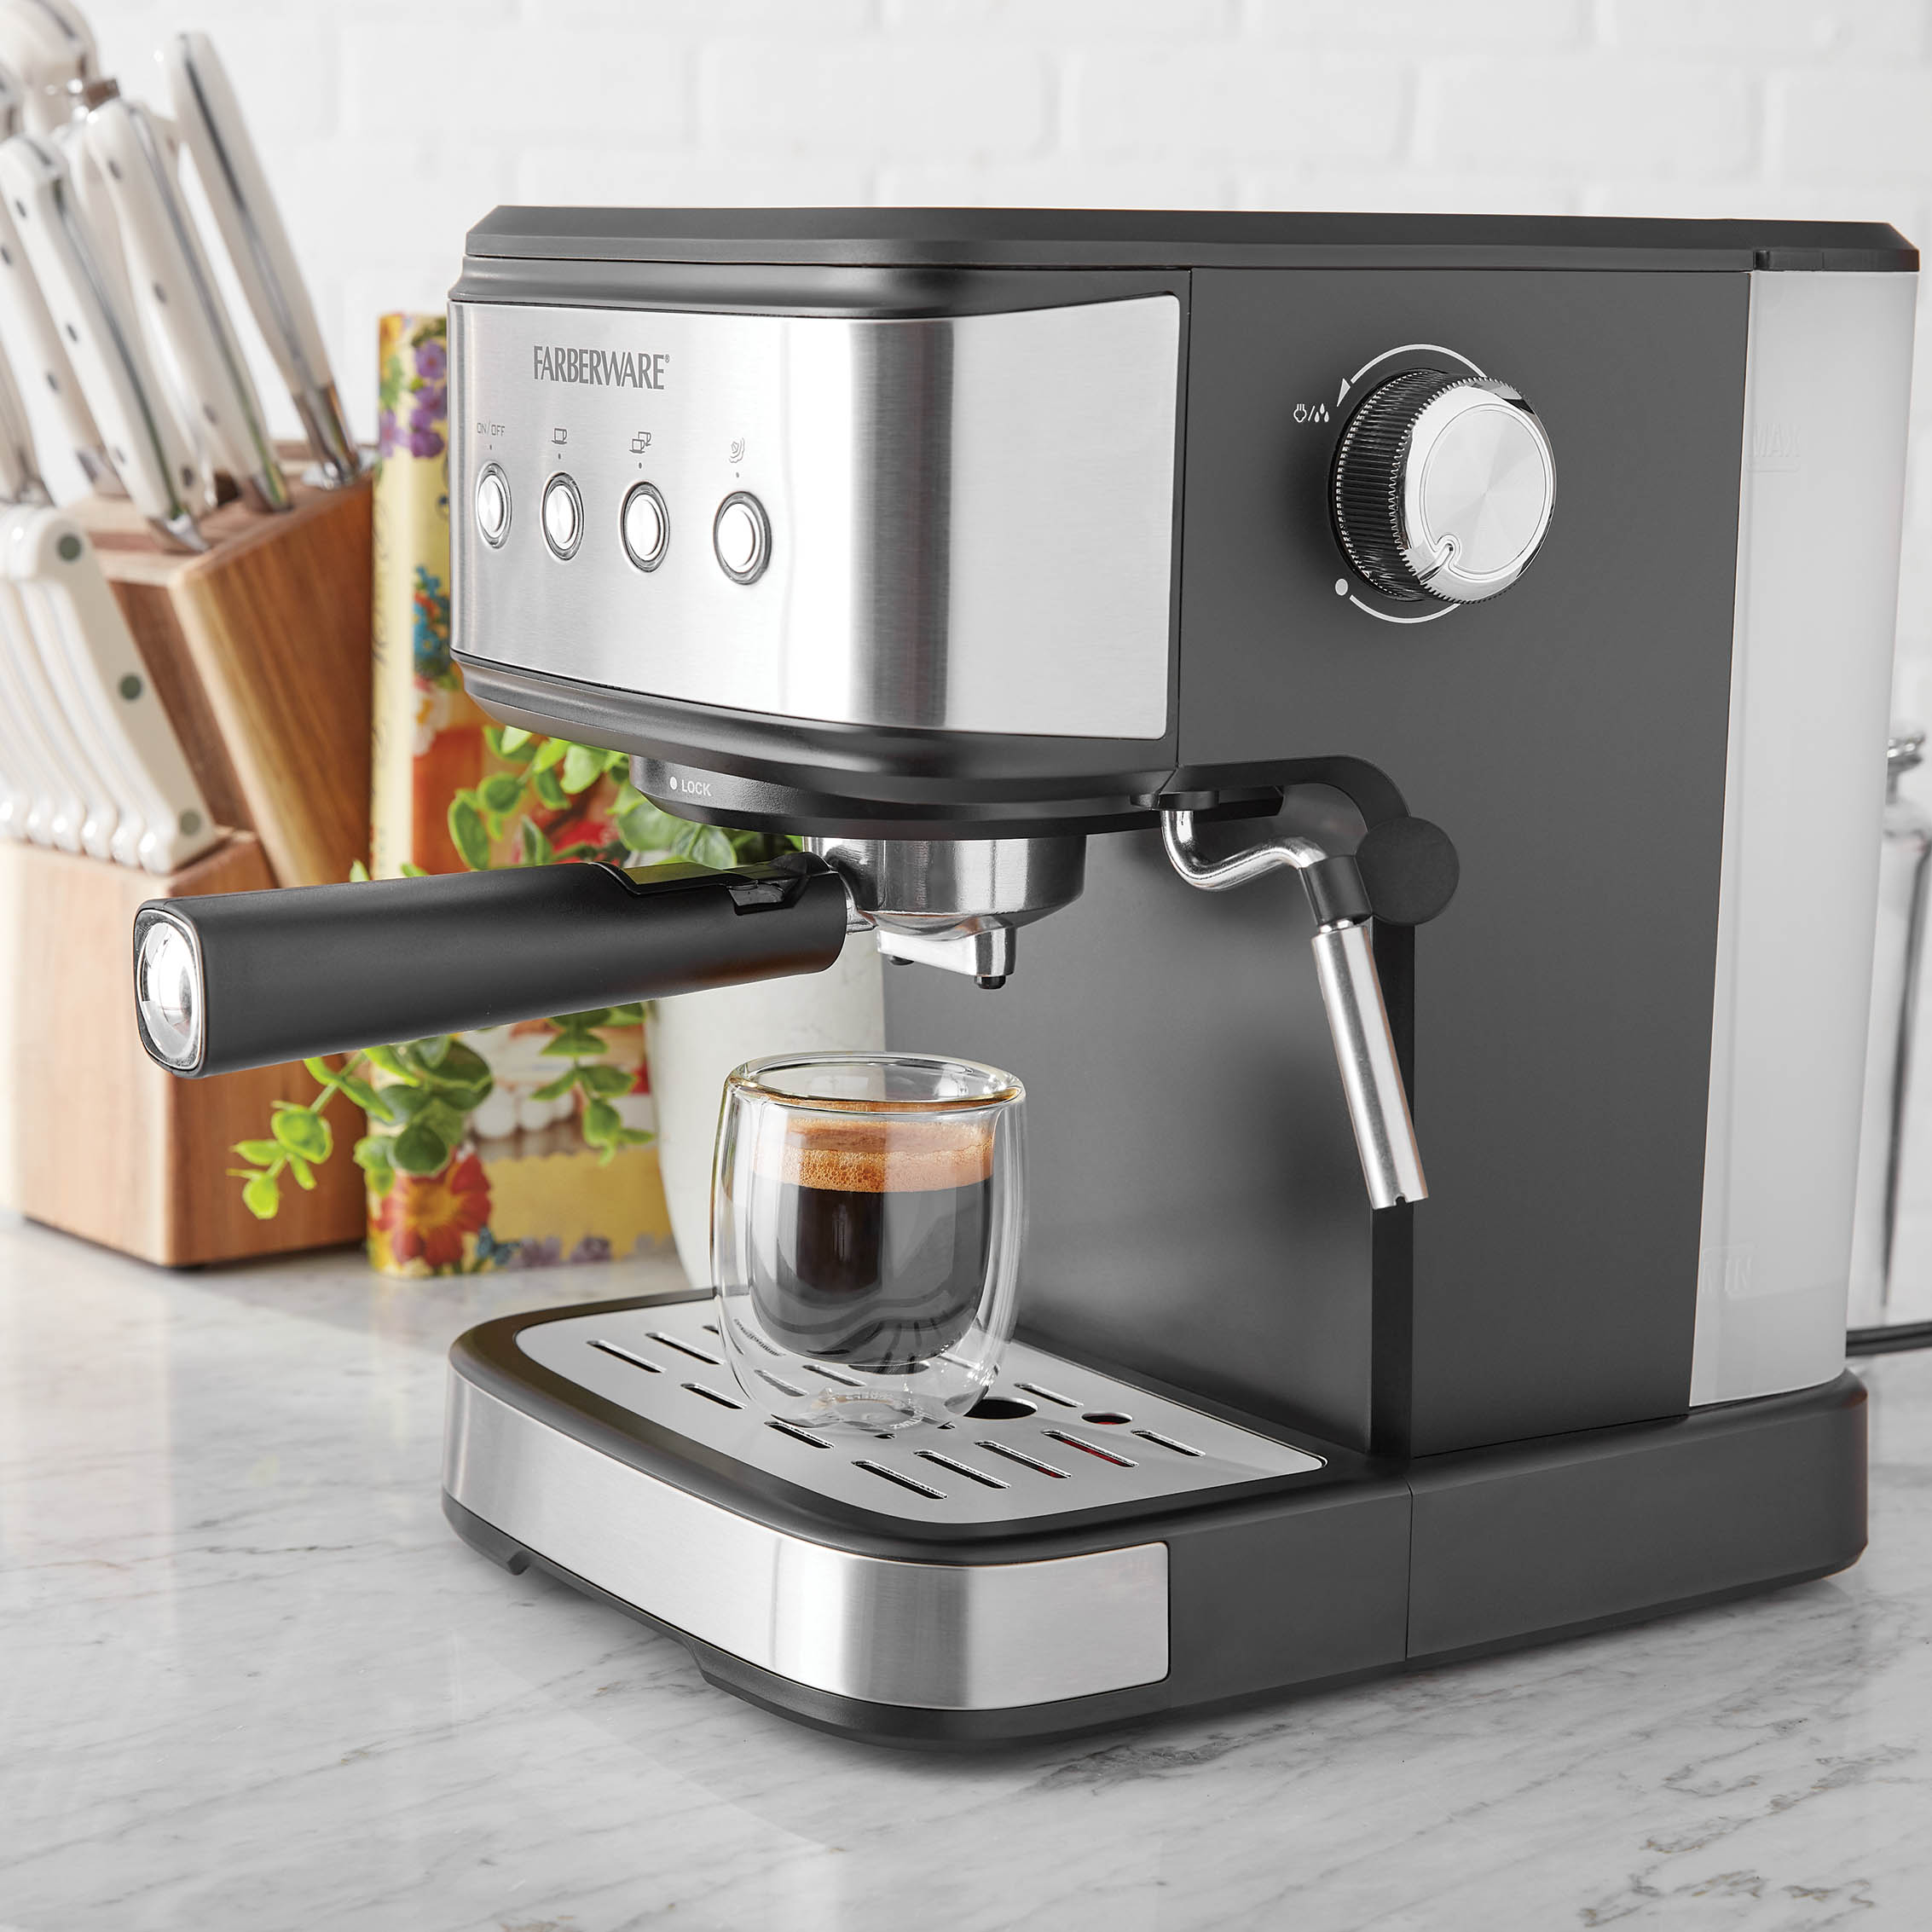 Farberware 20-Bar Espresso Maker, 1.5 Liter Capacity - image 3 of 8